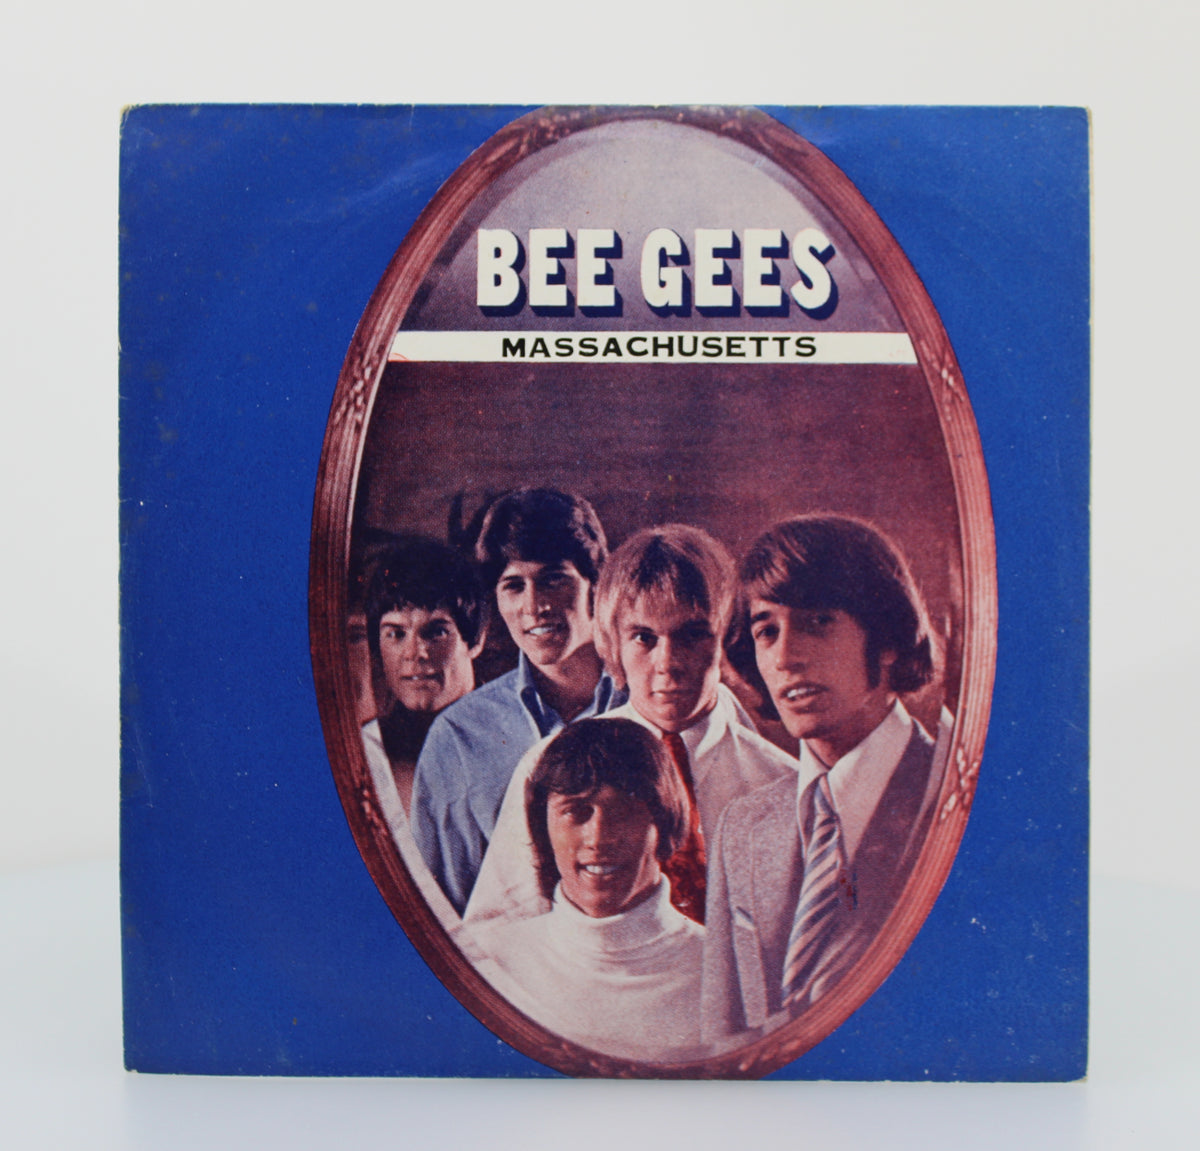 Bee Gees - Massachusetts, Vinyl Single (45rpm), Thailand